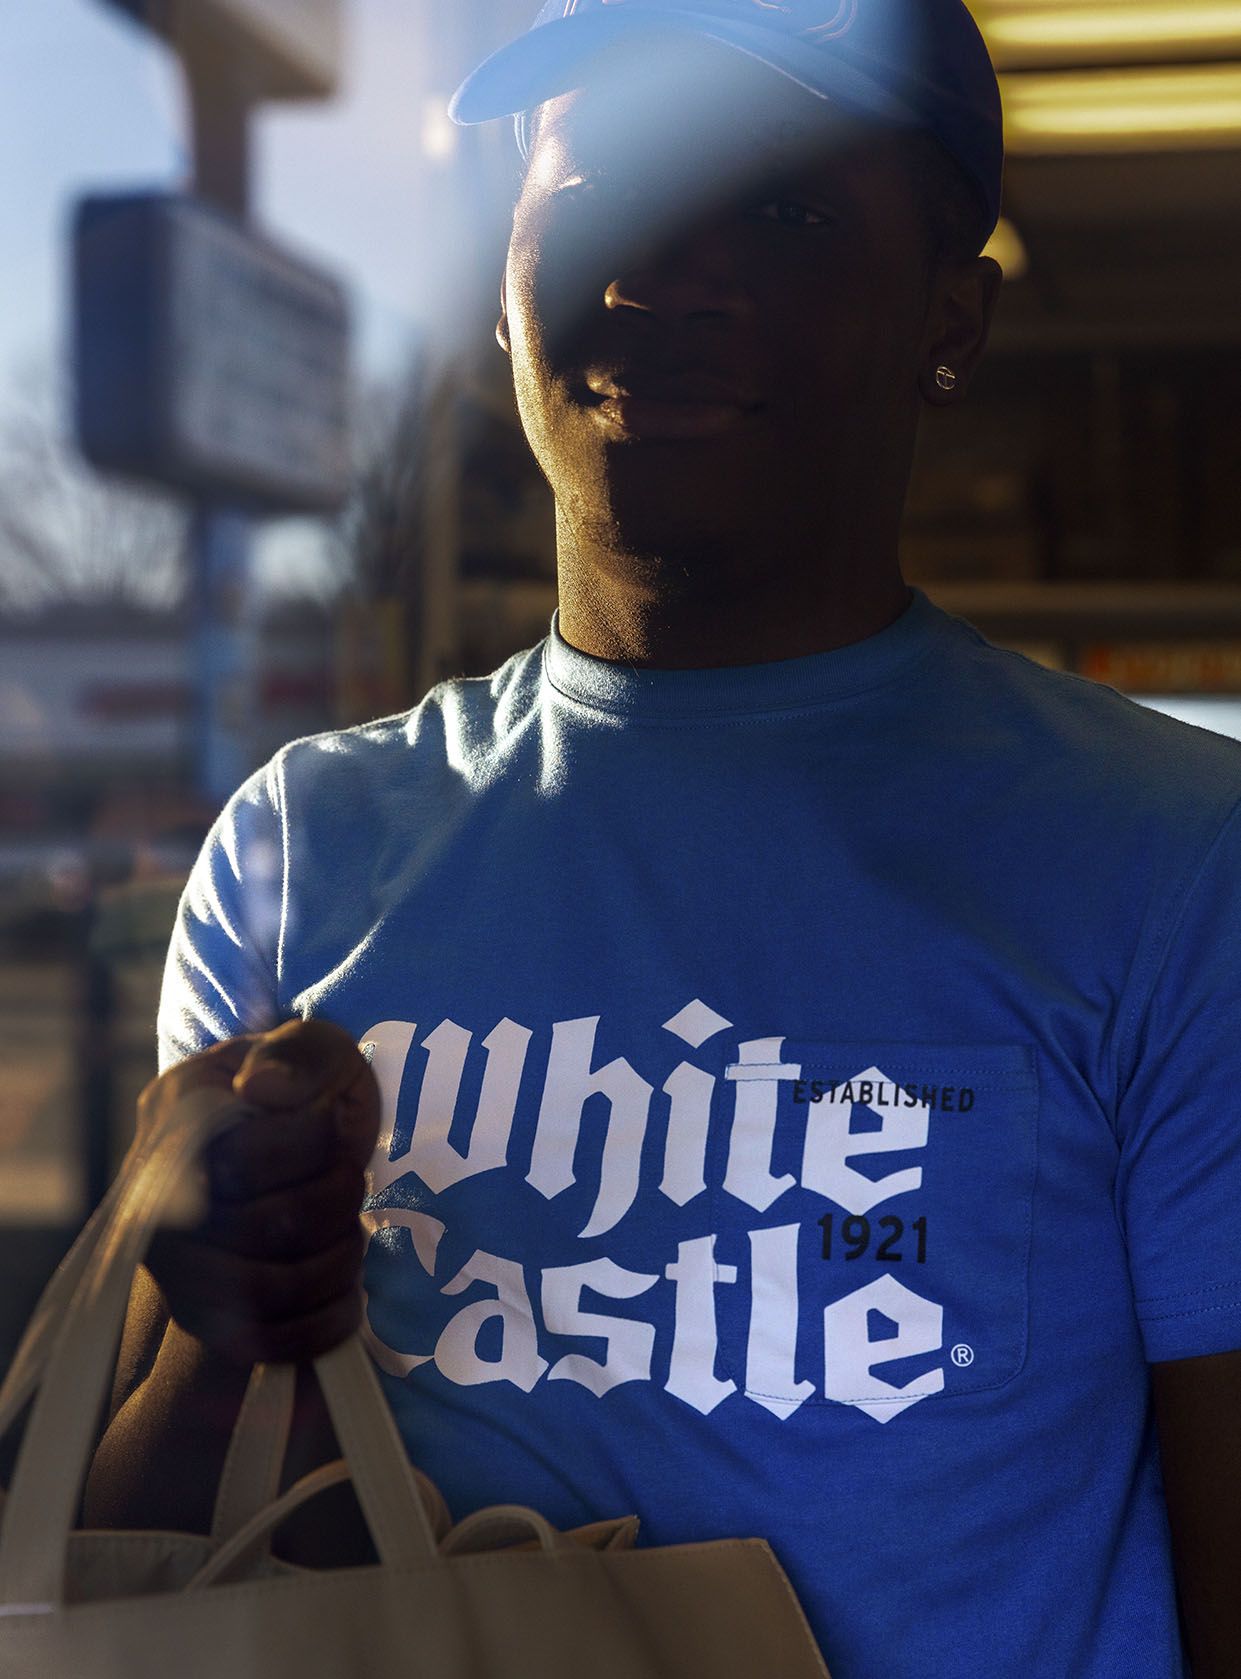 TELFAR designs White Castle uniforms for its 100th anniversary